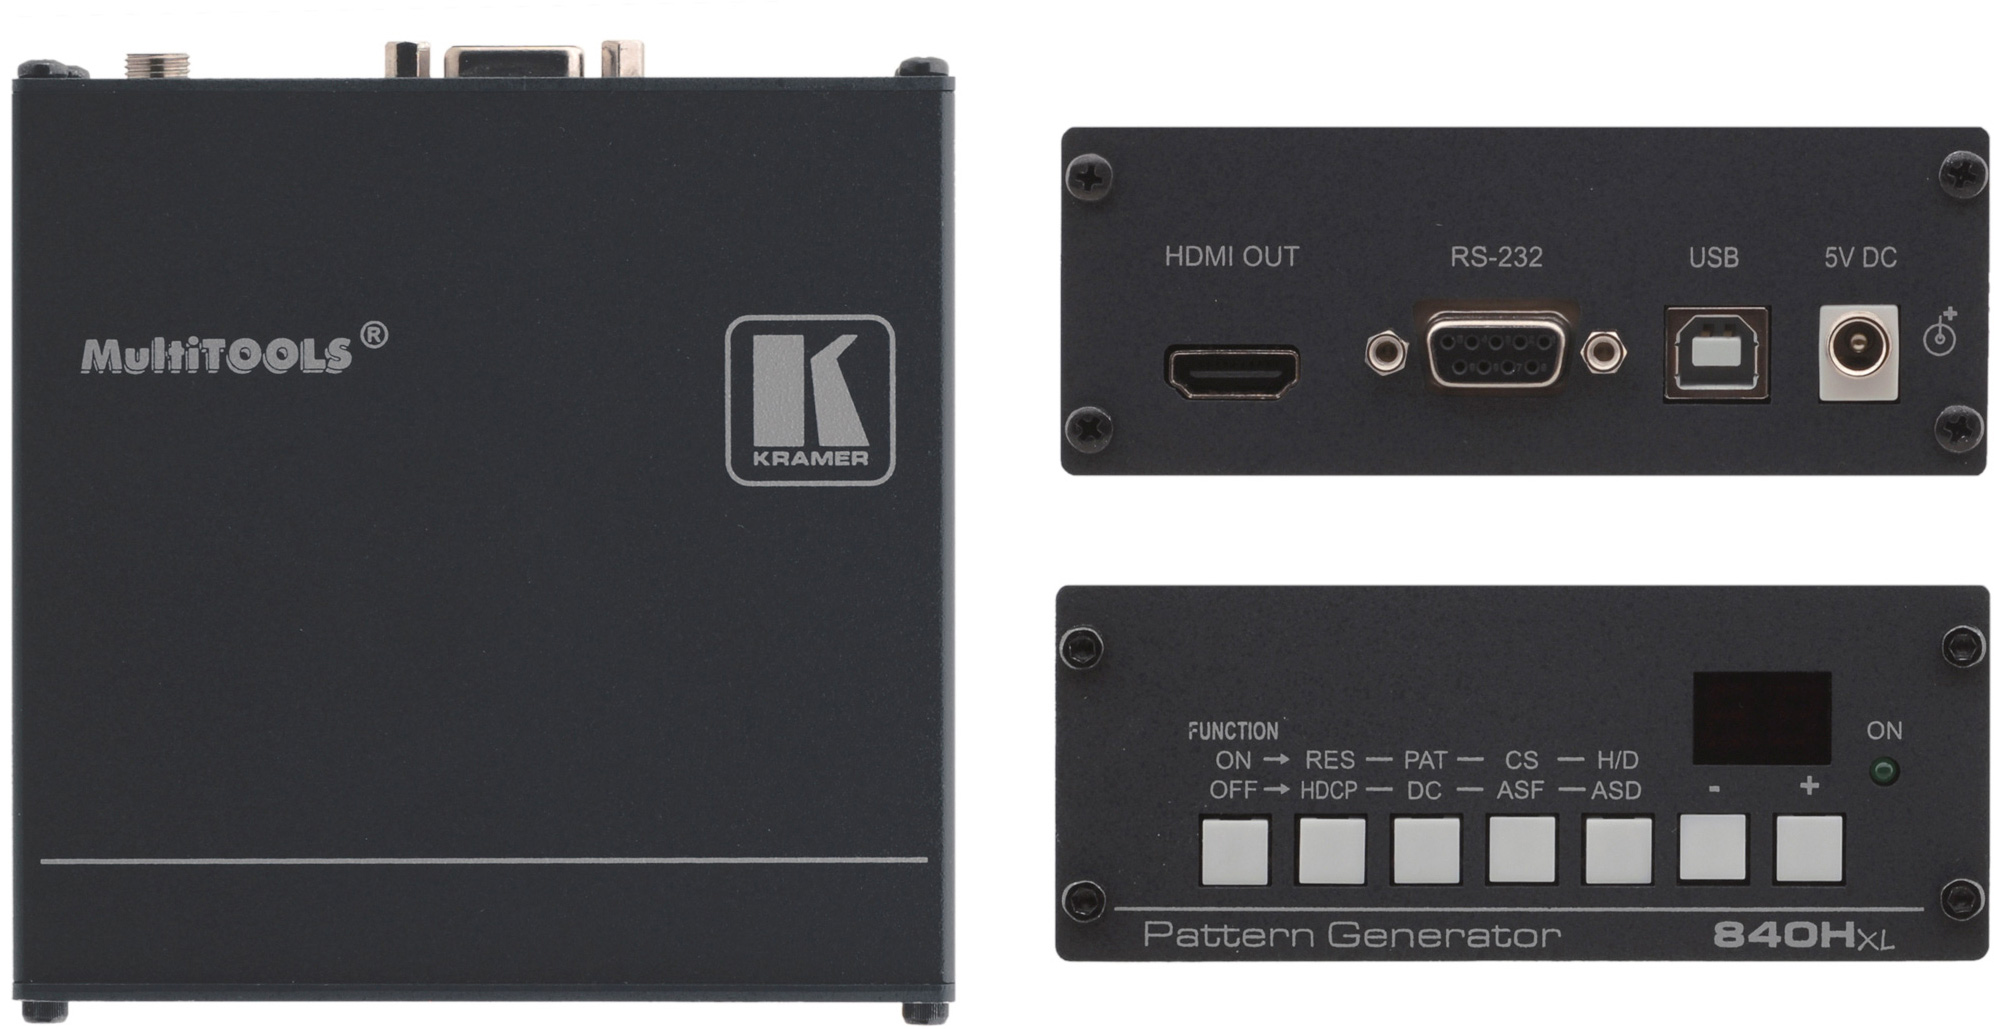 Kramer 840Hxl HDMI Video Test Pattern Generator